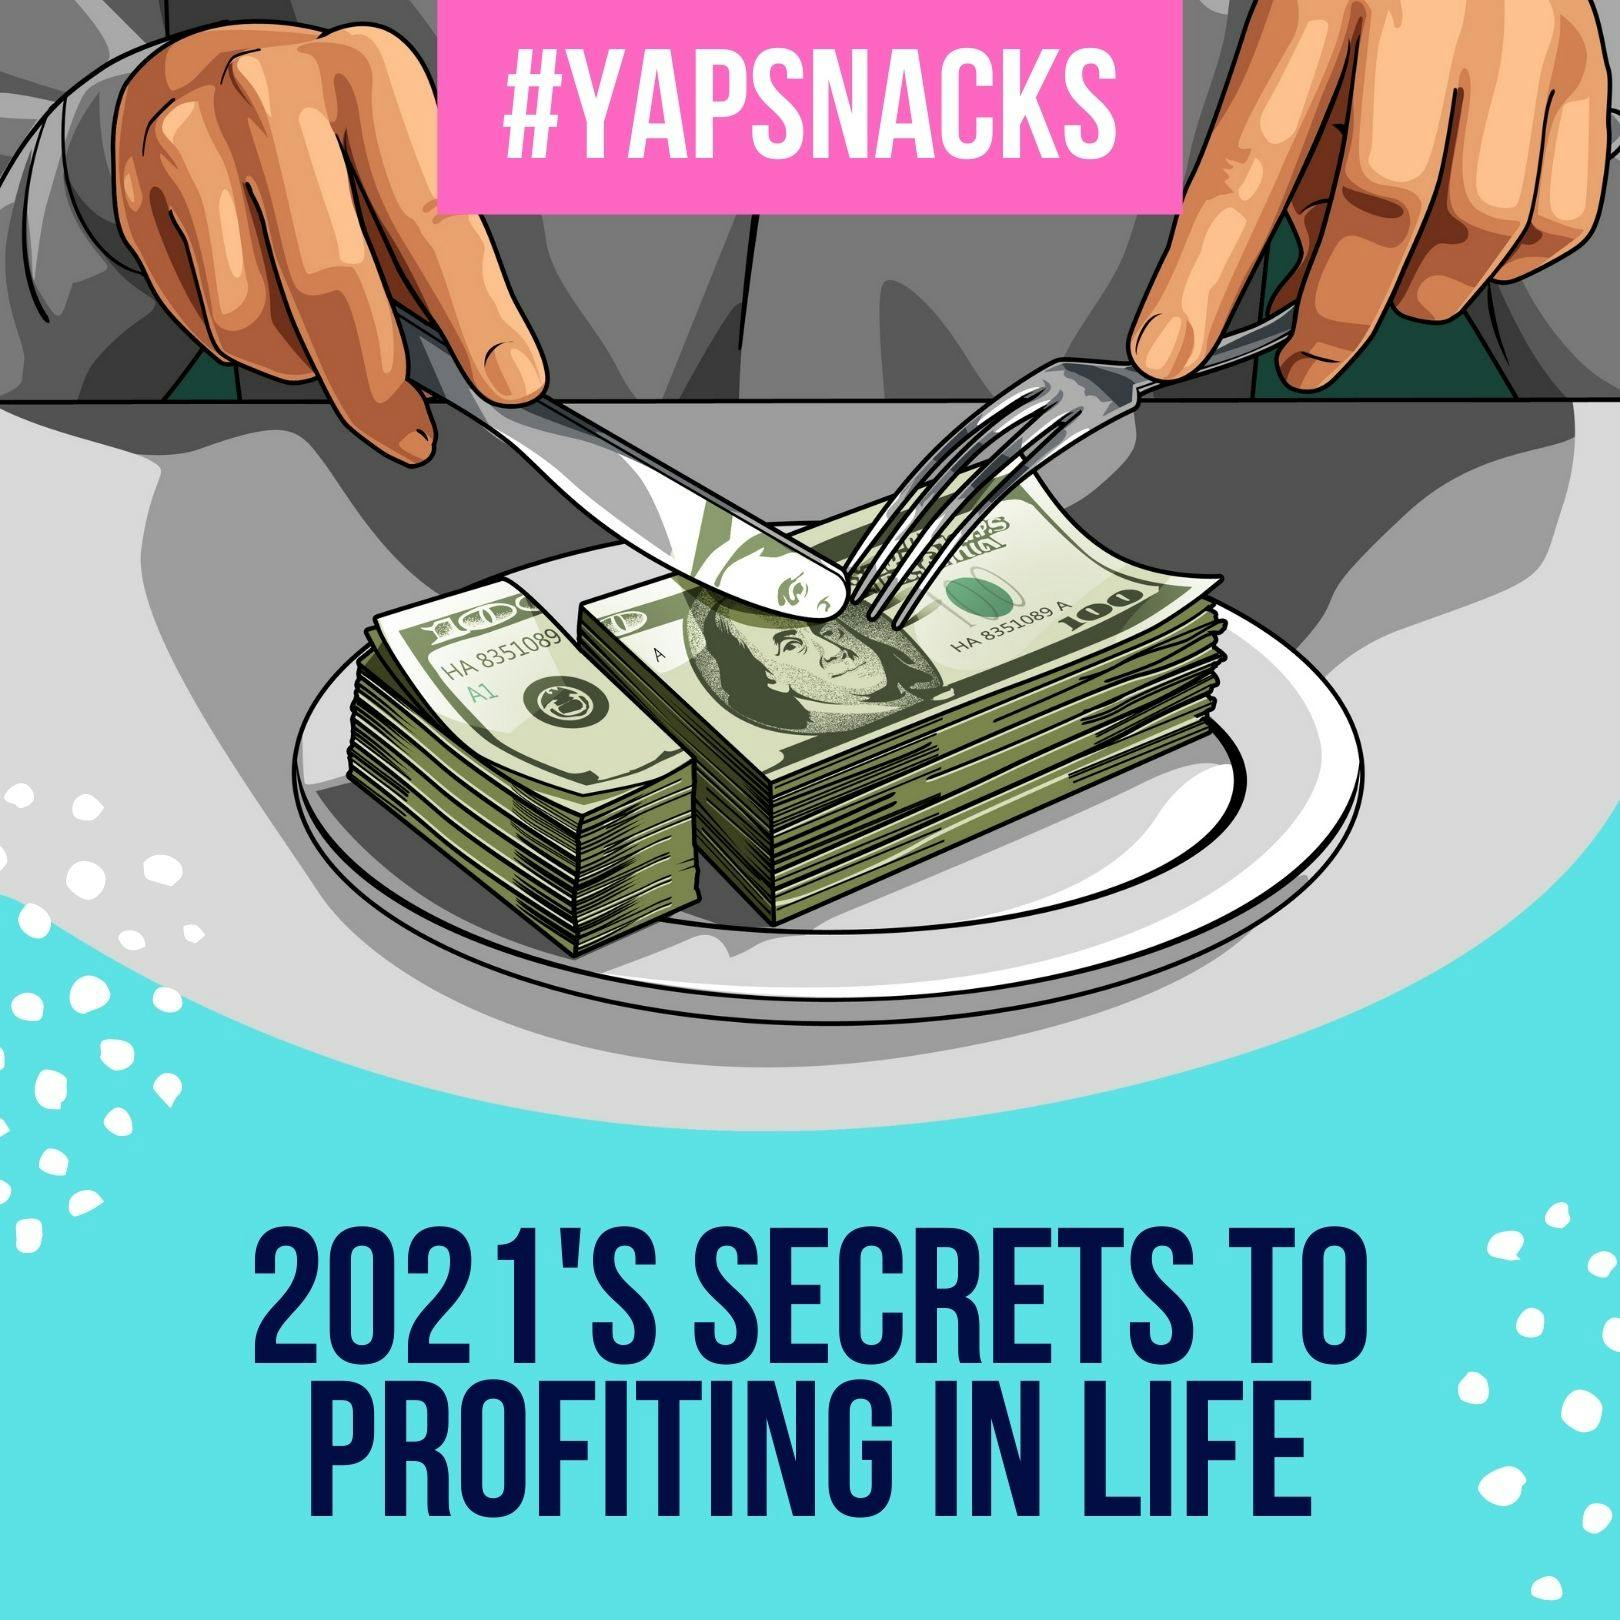 YAPSnacks: 2021's Secrets To Profiting In Life - Purpose, Priorities and Balance | Part 1